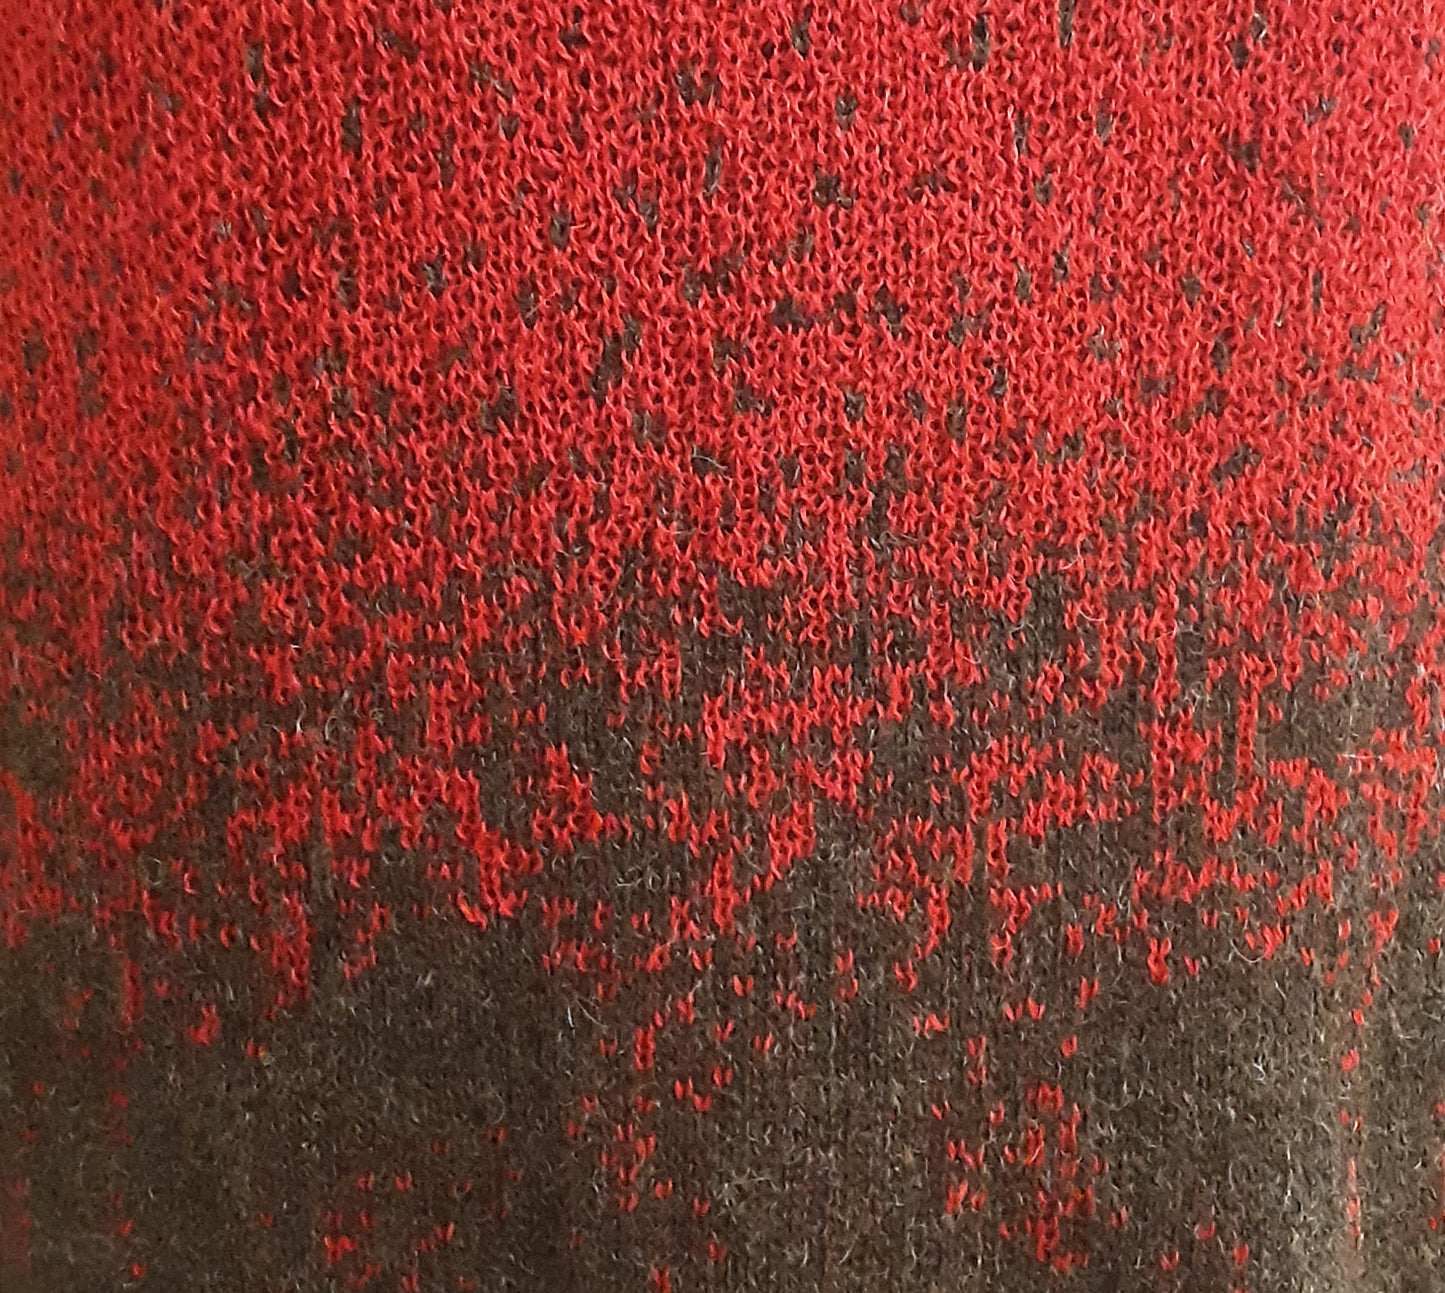 Alpaca Women’s High Neck Red Jacquard Knit Diesel